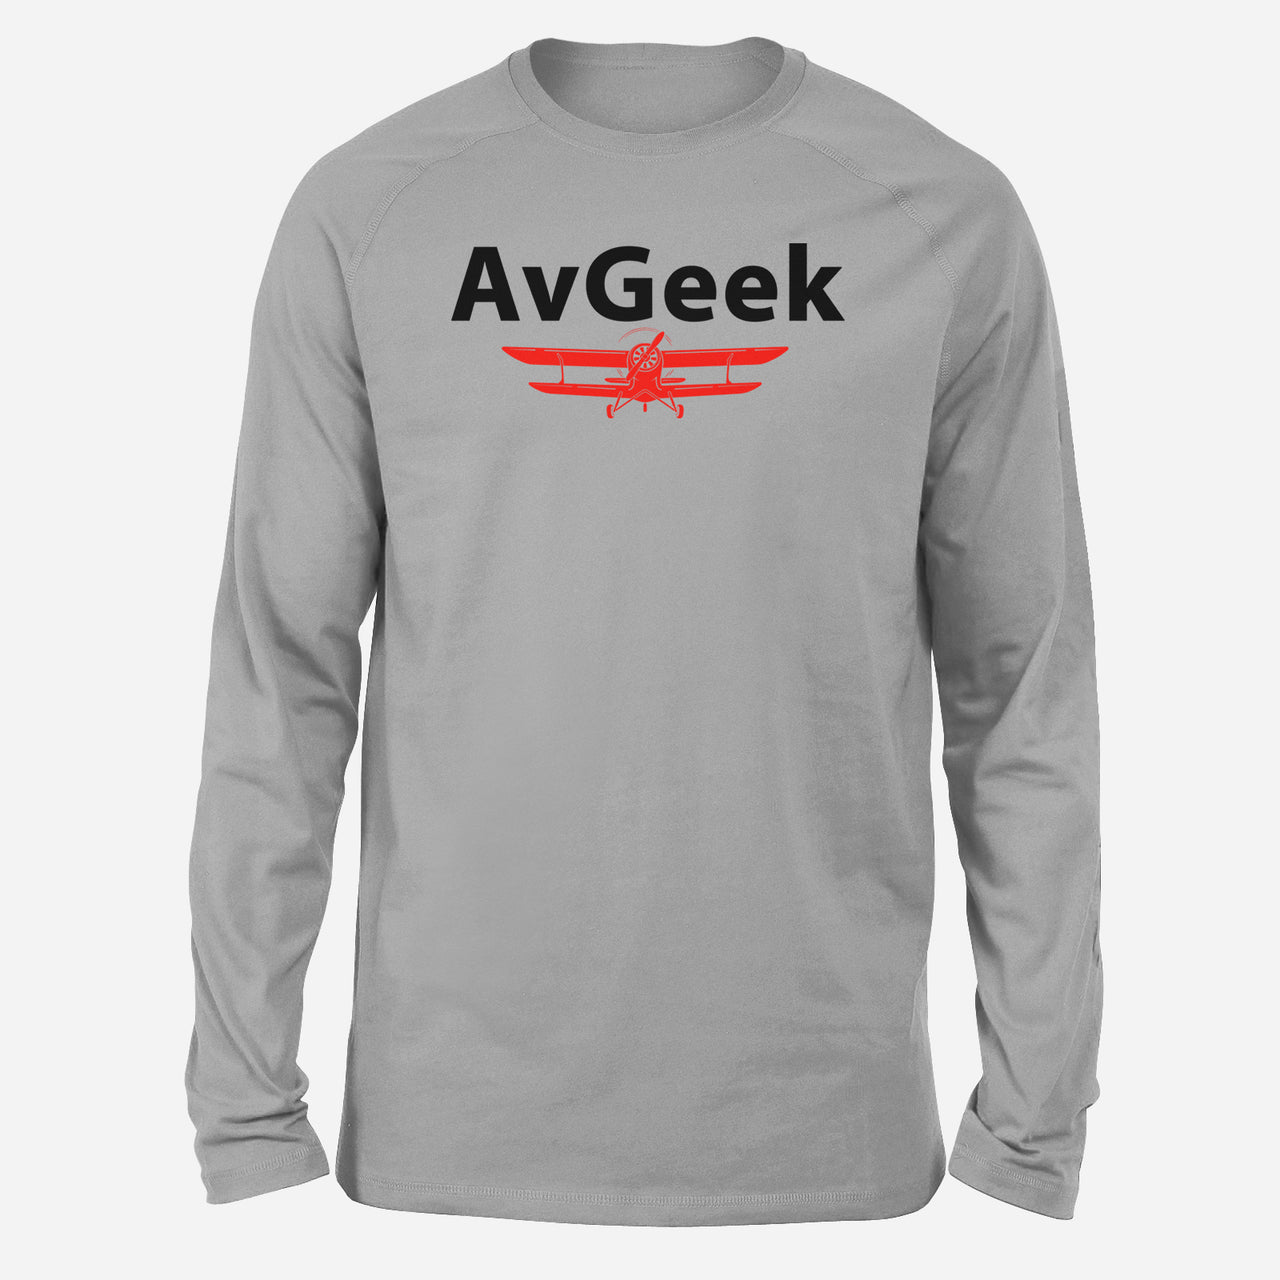 Avgeek Designed Long-Sleeve T-Shirts